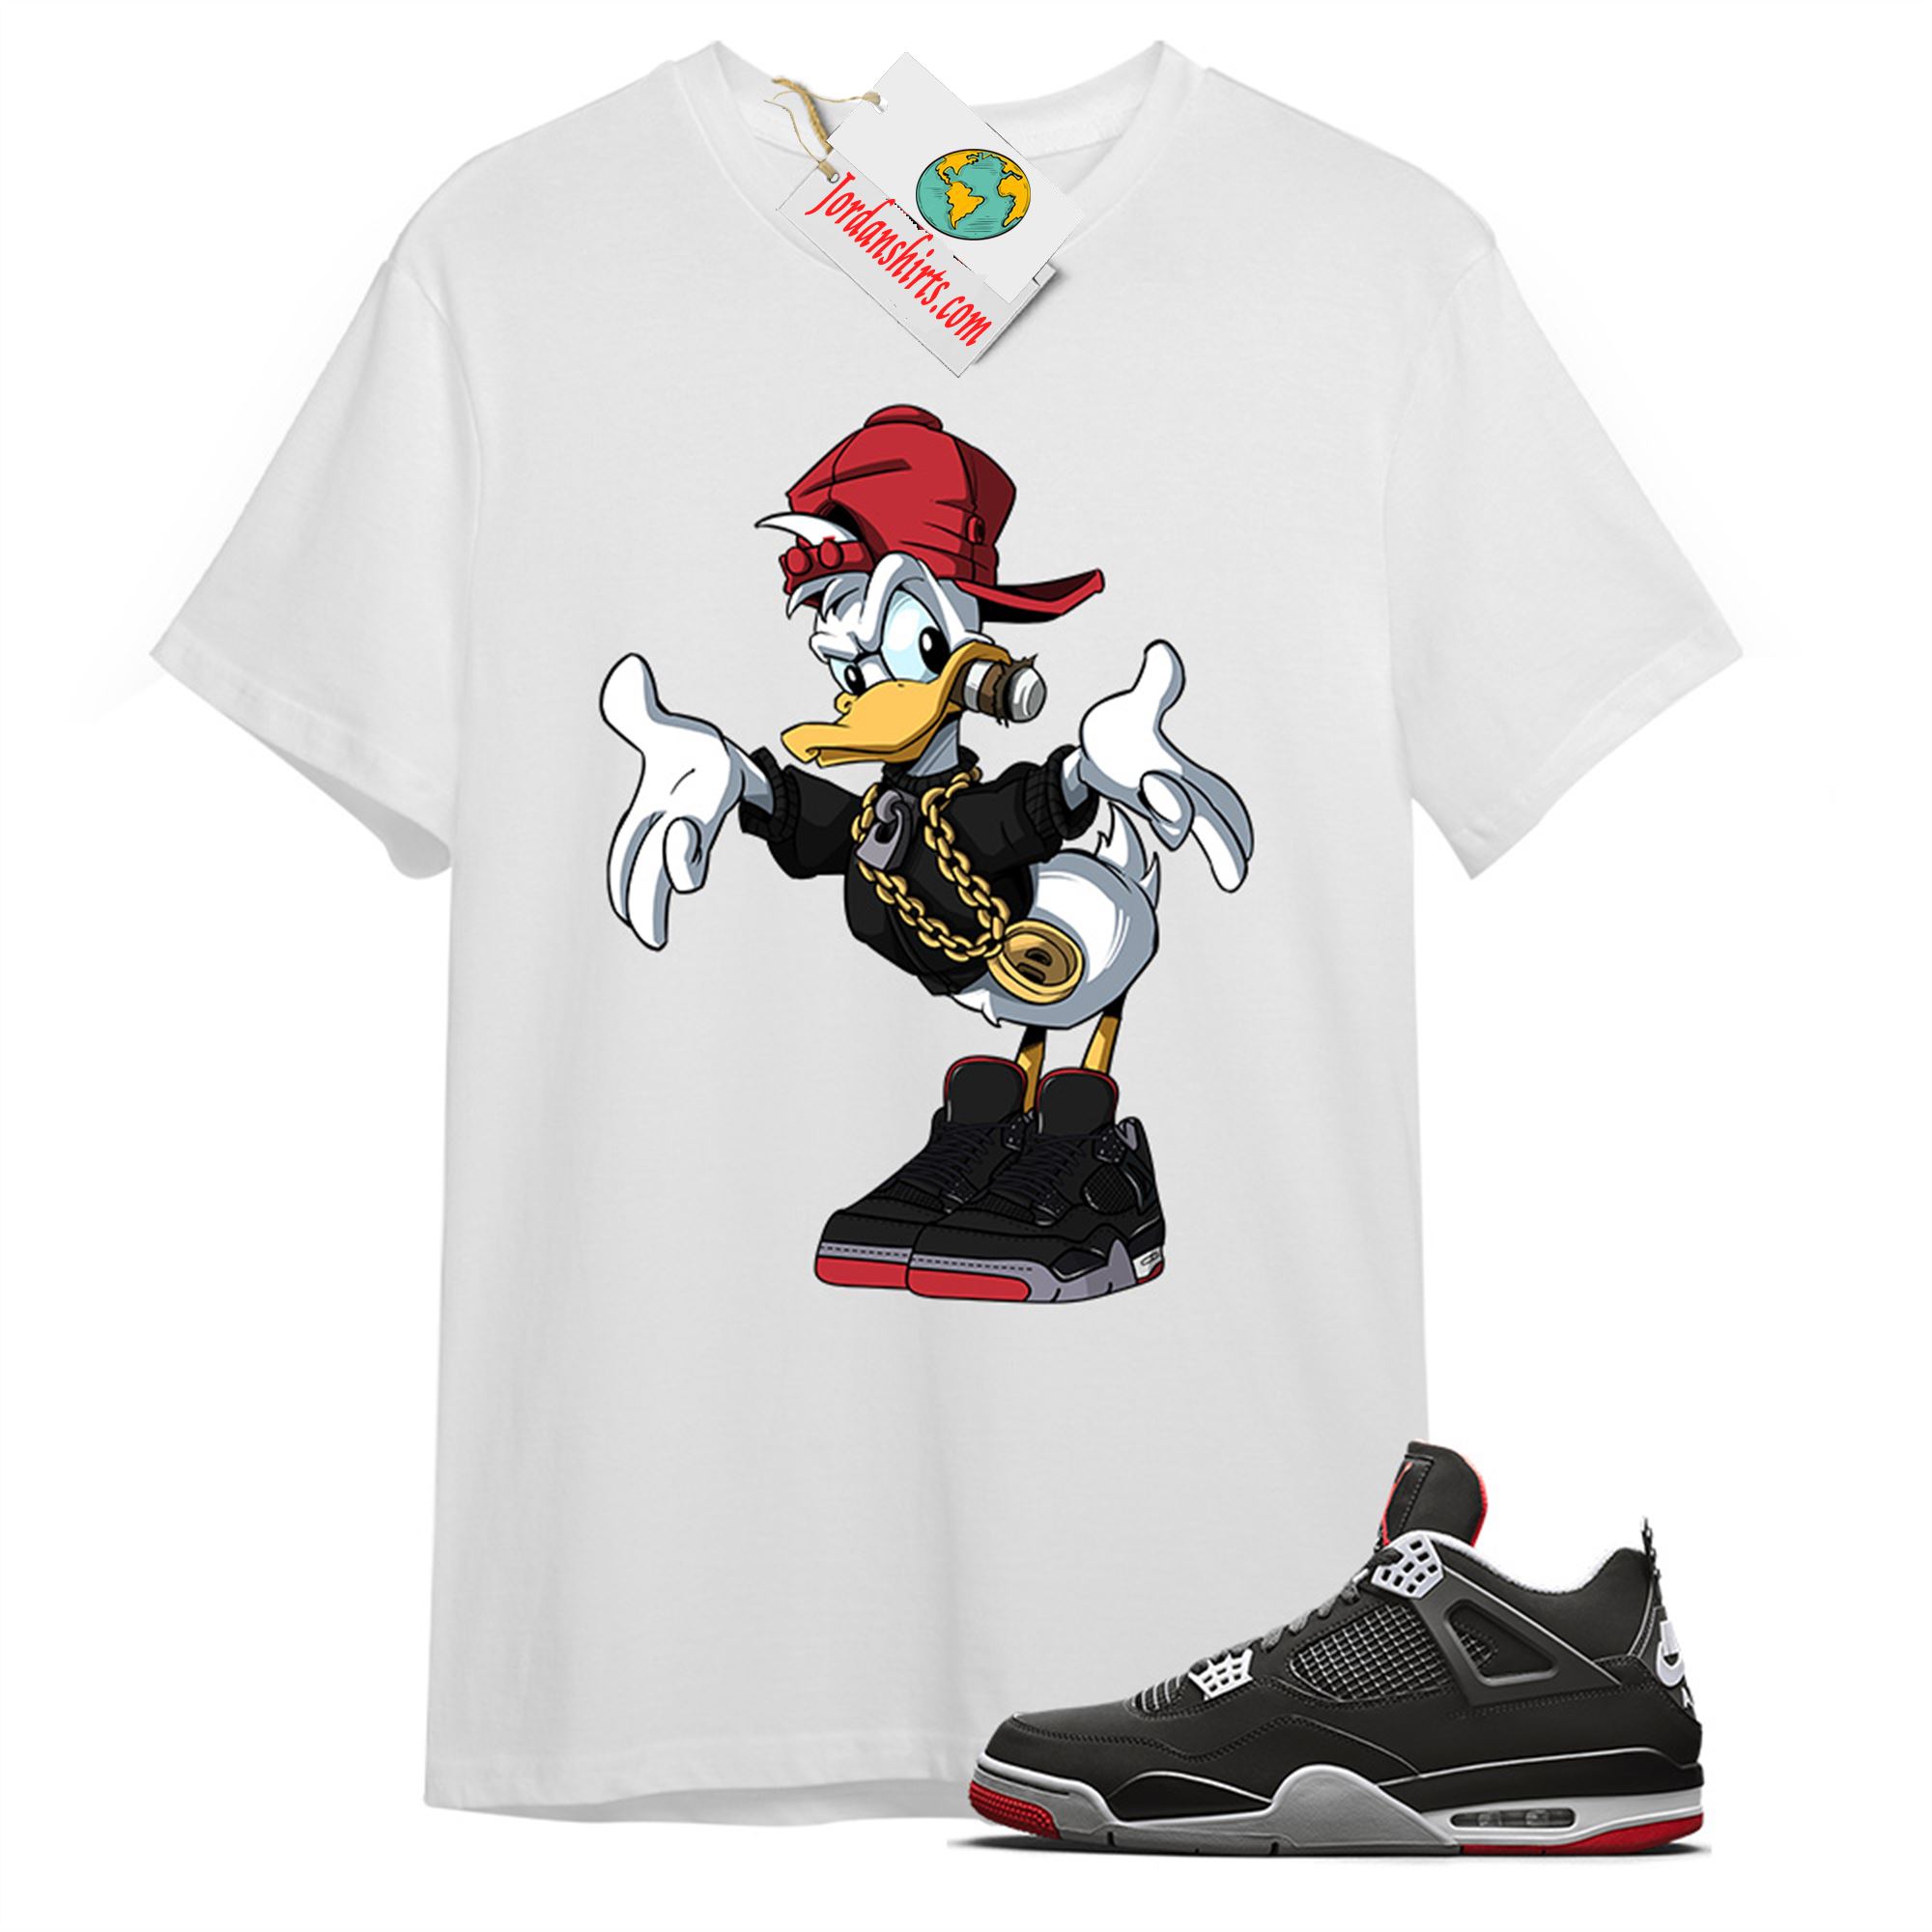 Jordan 4 Shirt, Donald Duck White T-shirt Air Jordan 4 Bred 4s Full Size Up To 5xl